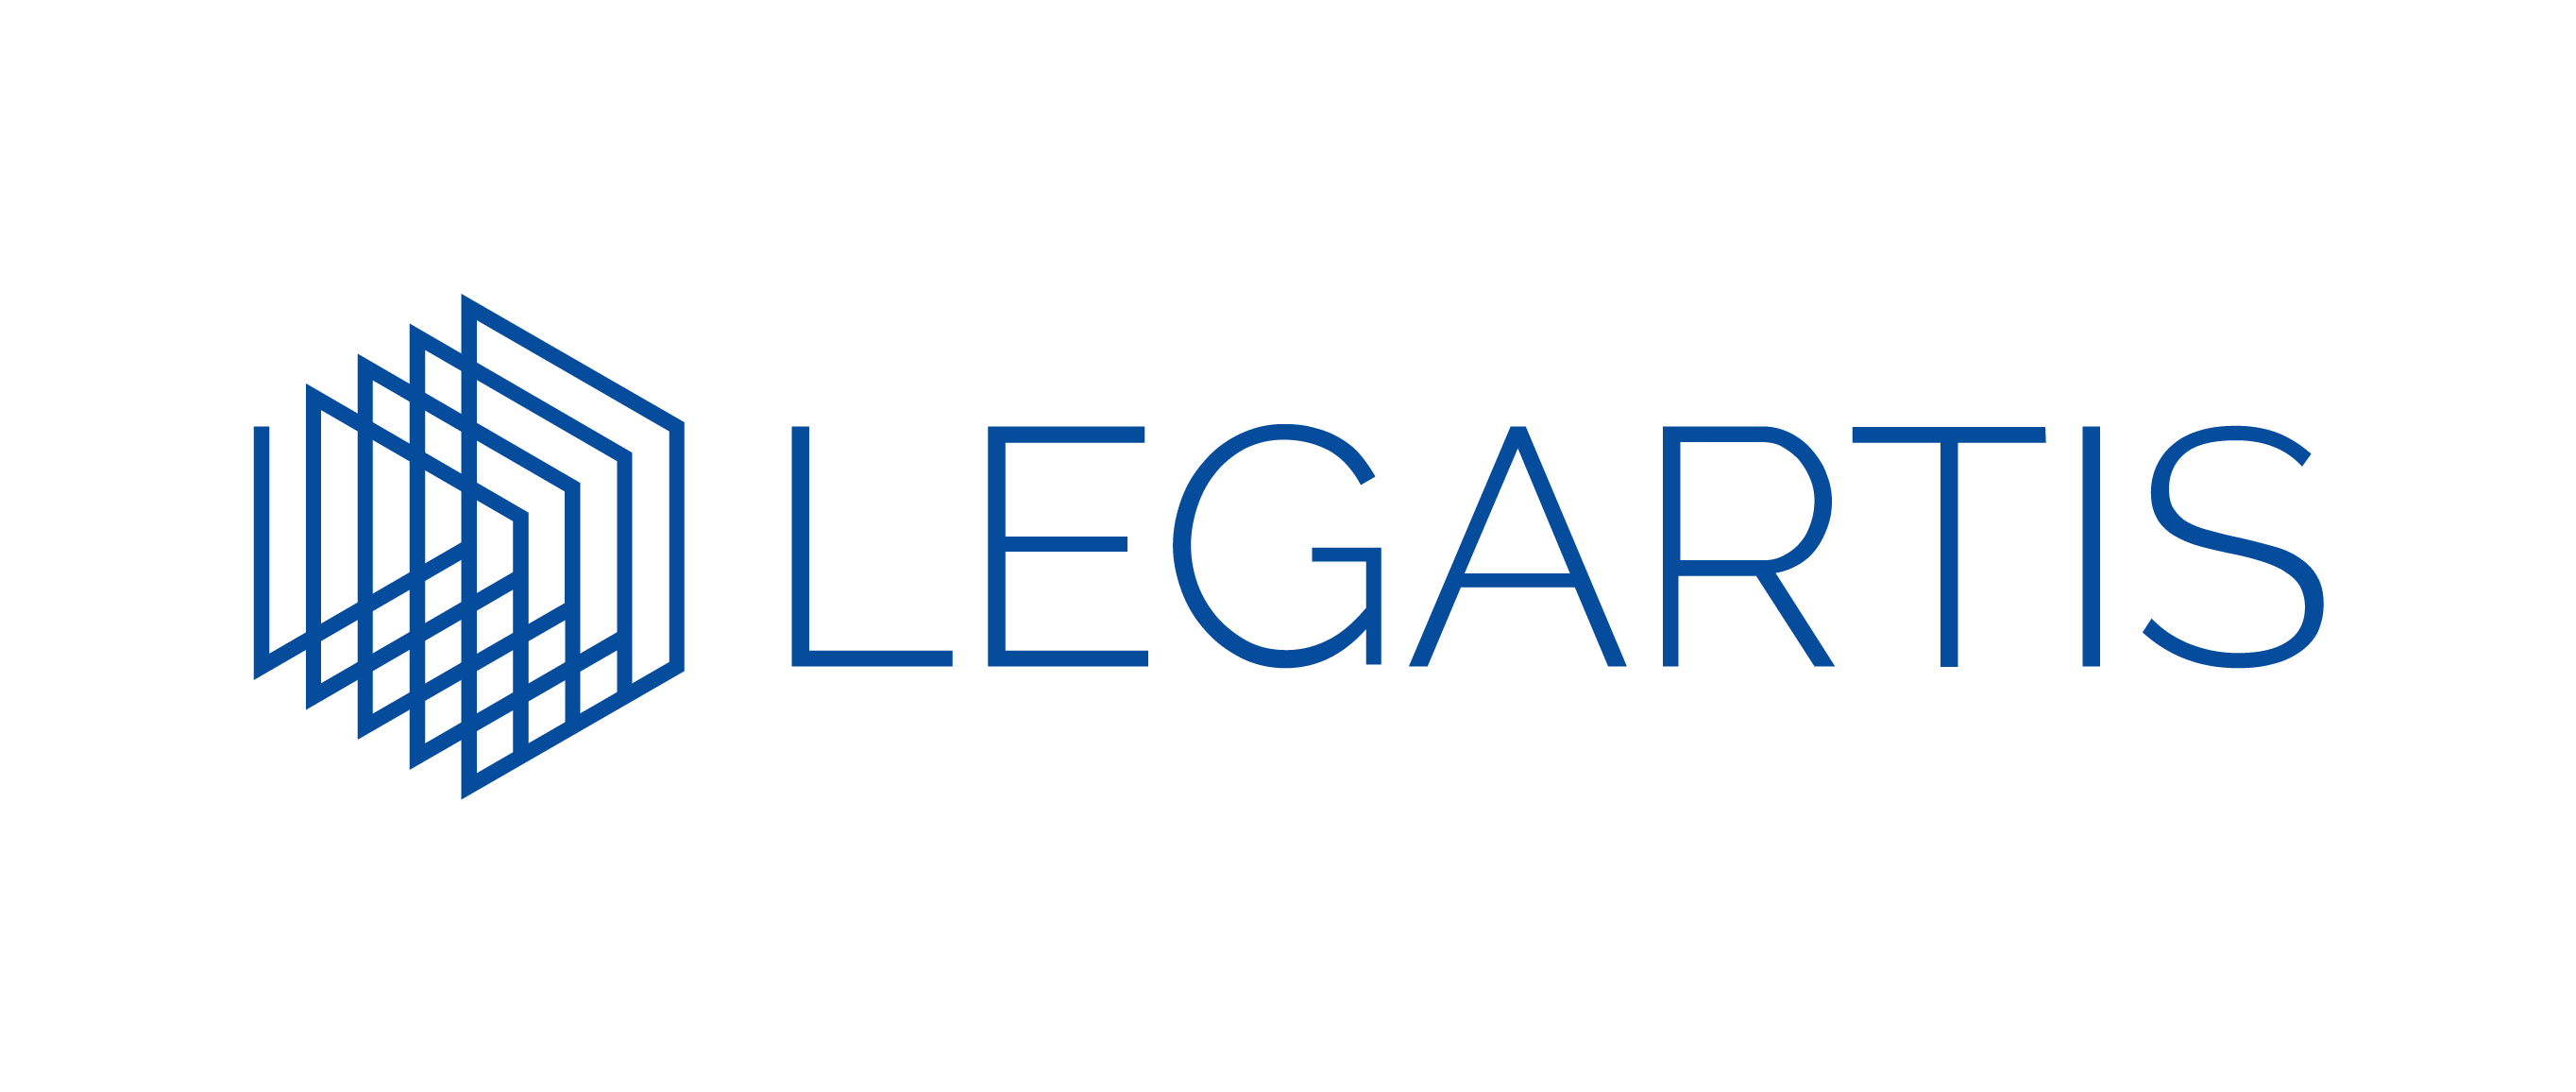 Legartis Logo